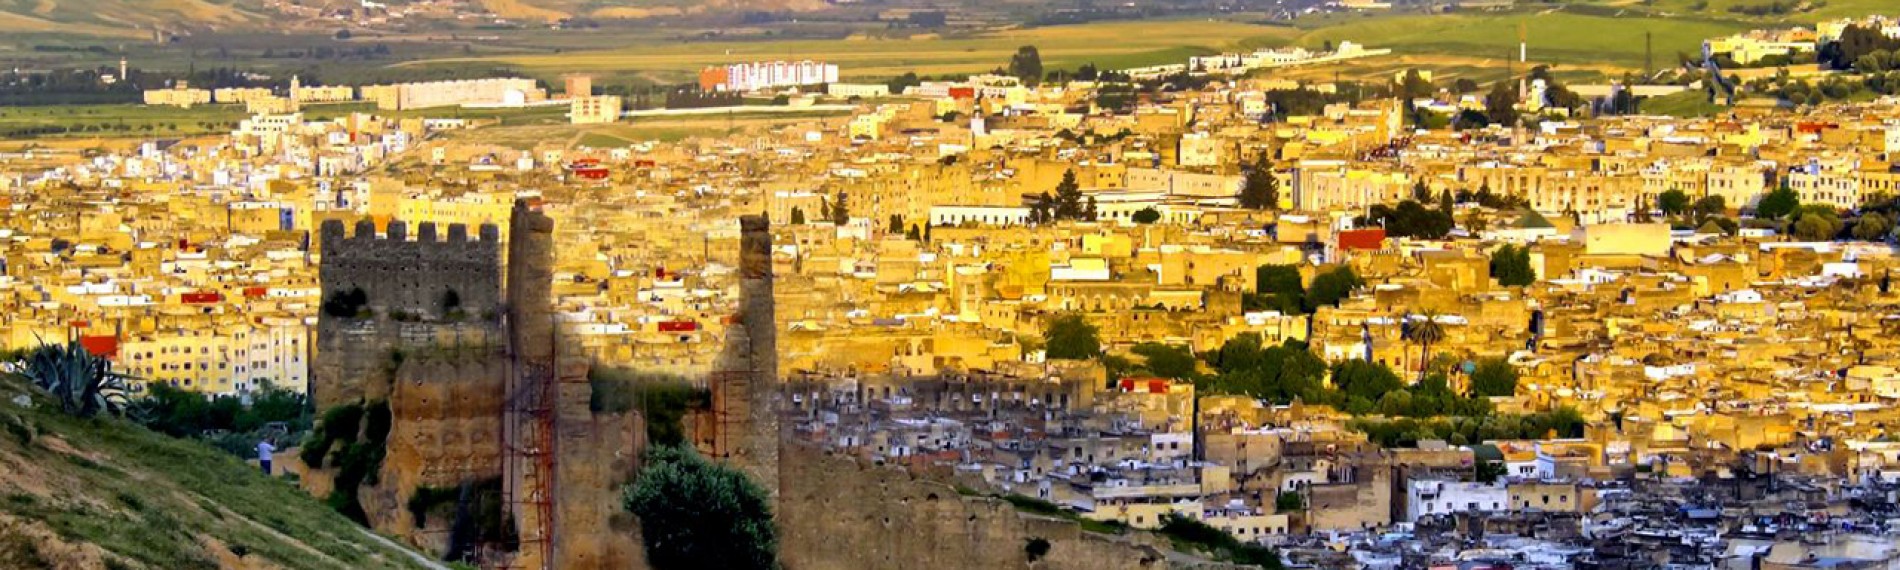 Morocco Islamic Cities Tour 